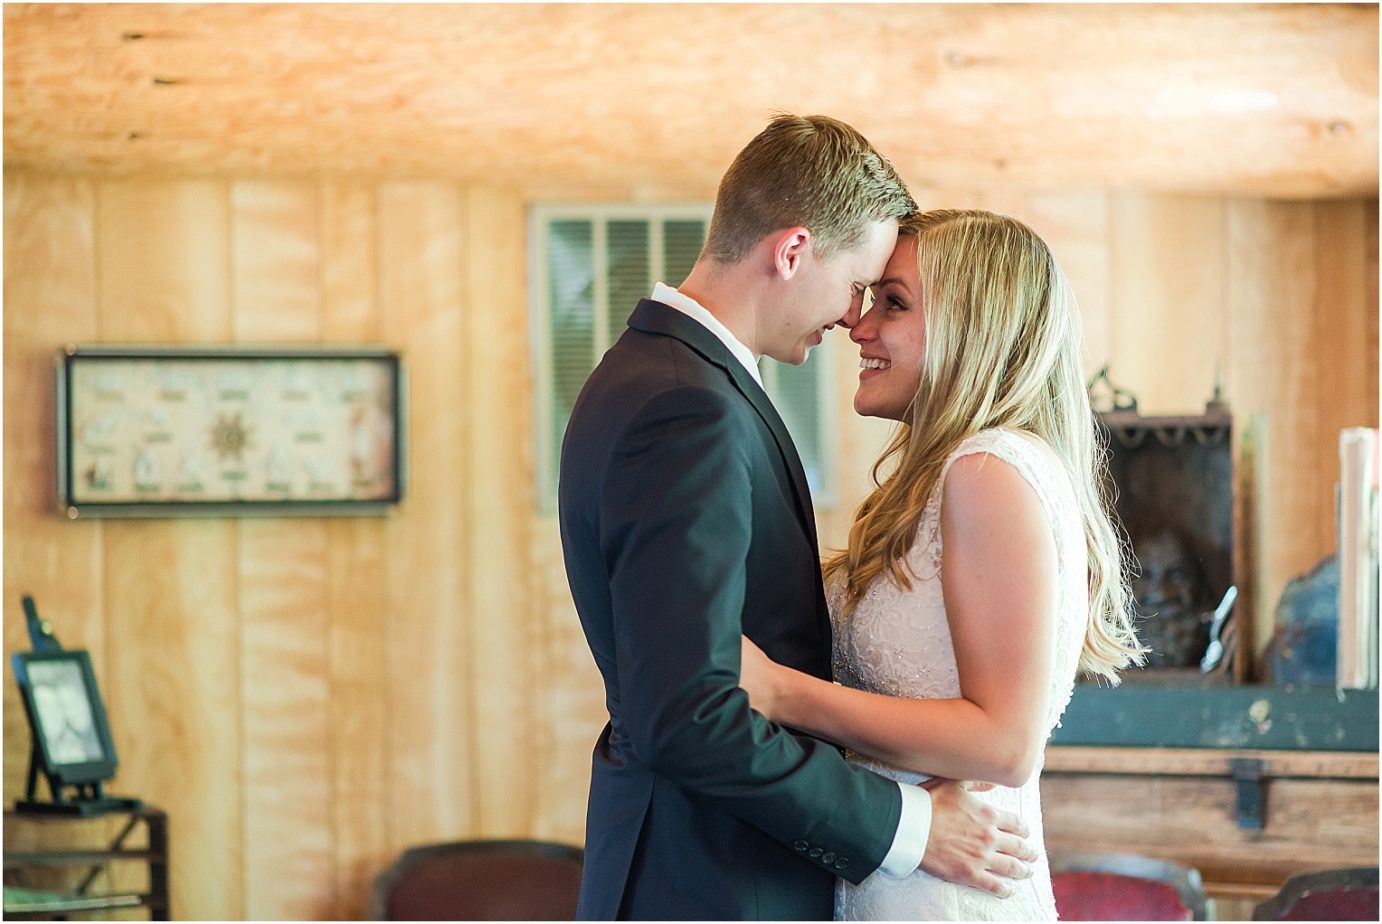 DIY backyard onalaska wedding Onalaska Photographer Bryan and Olivia groom's first look